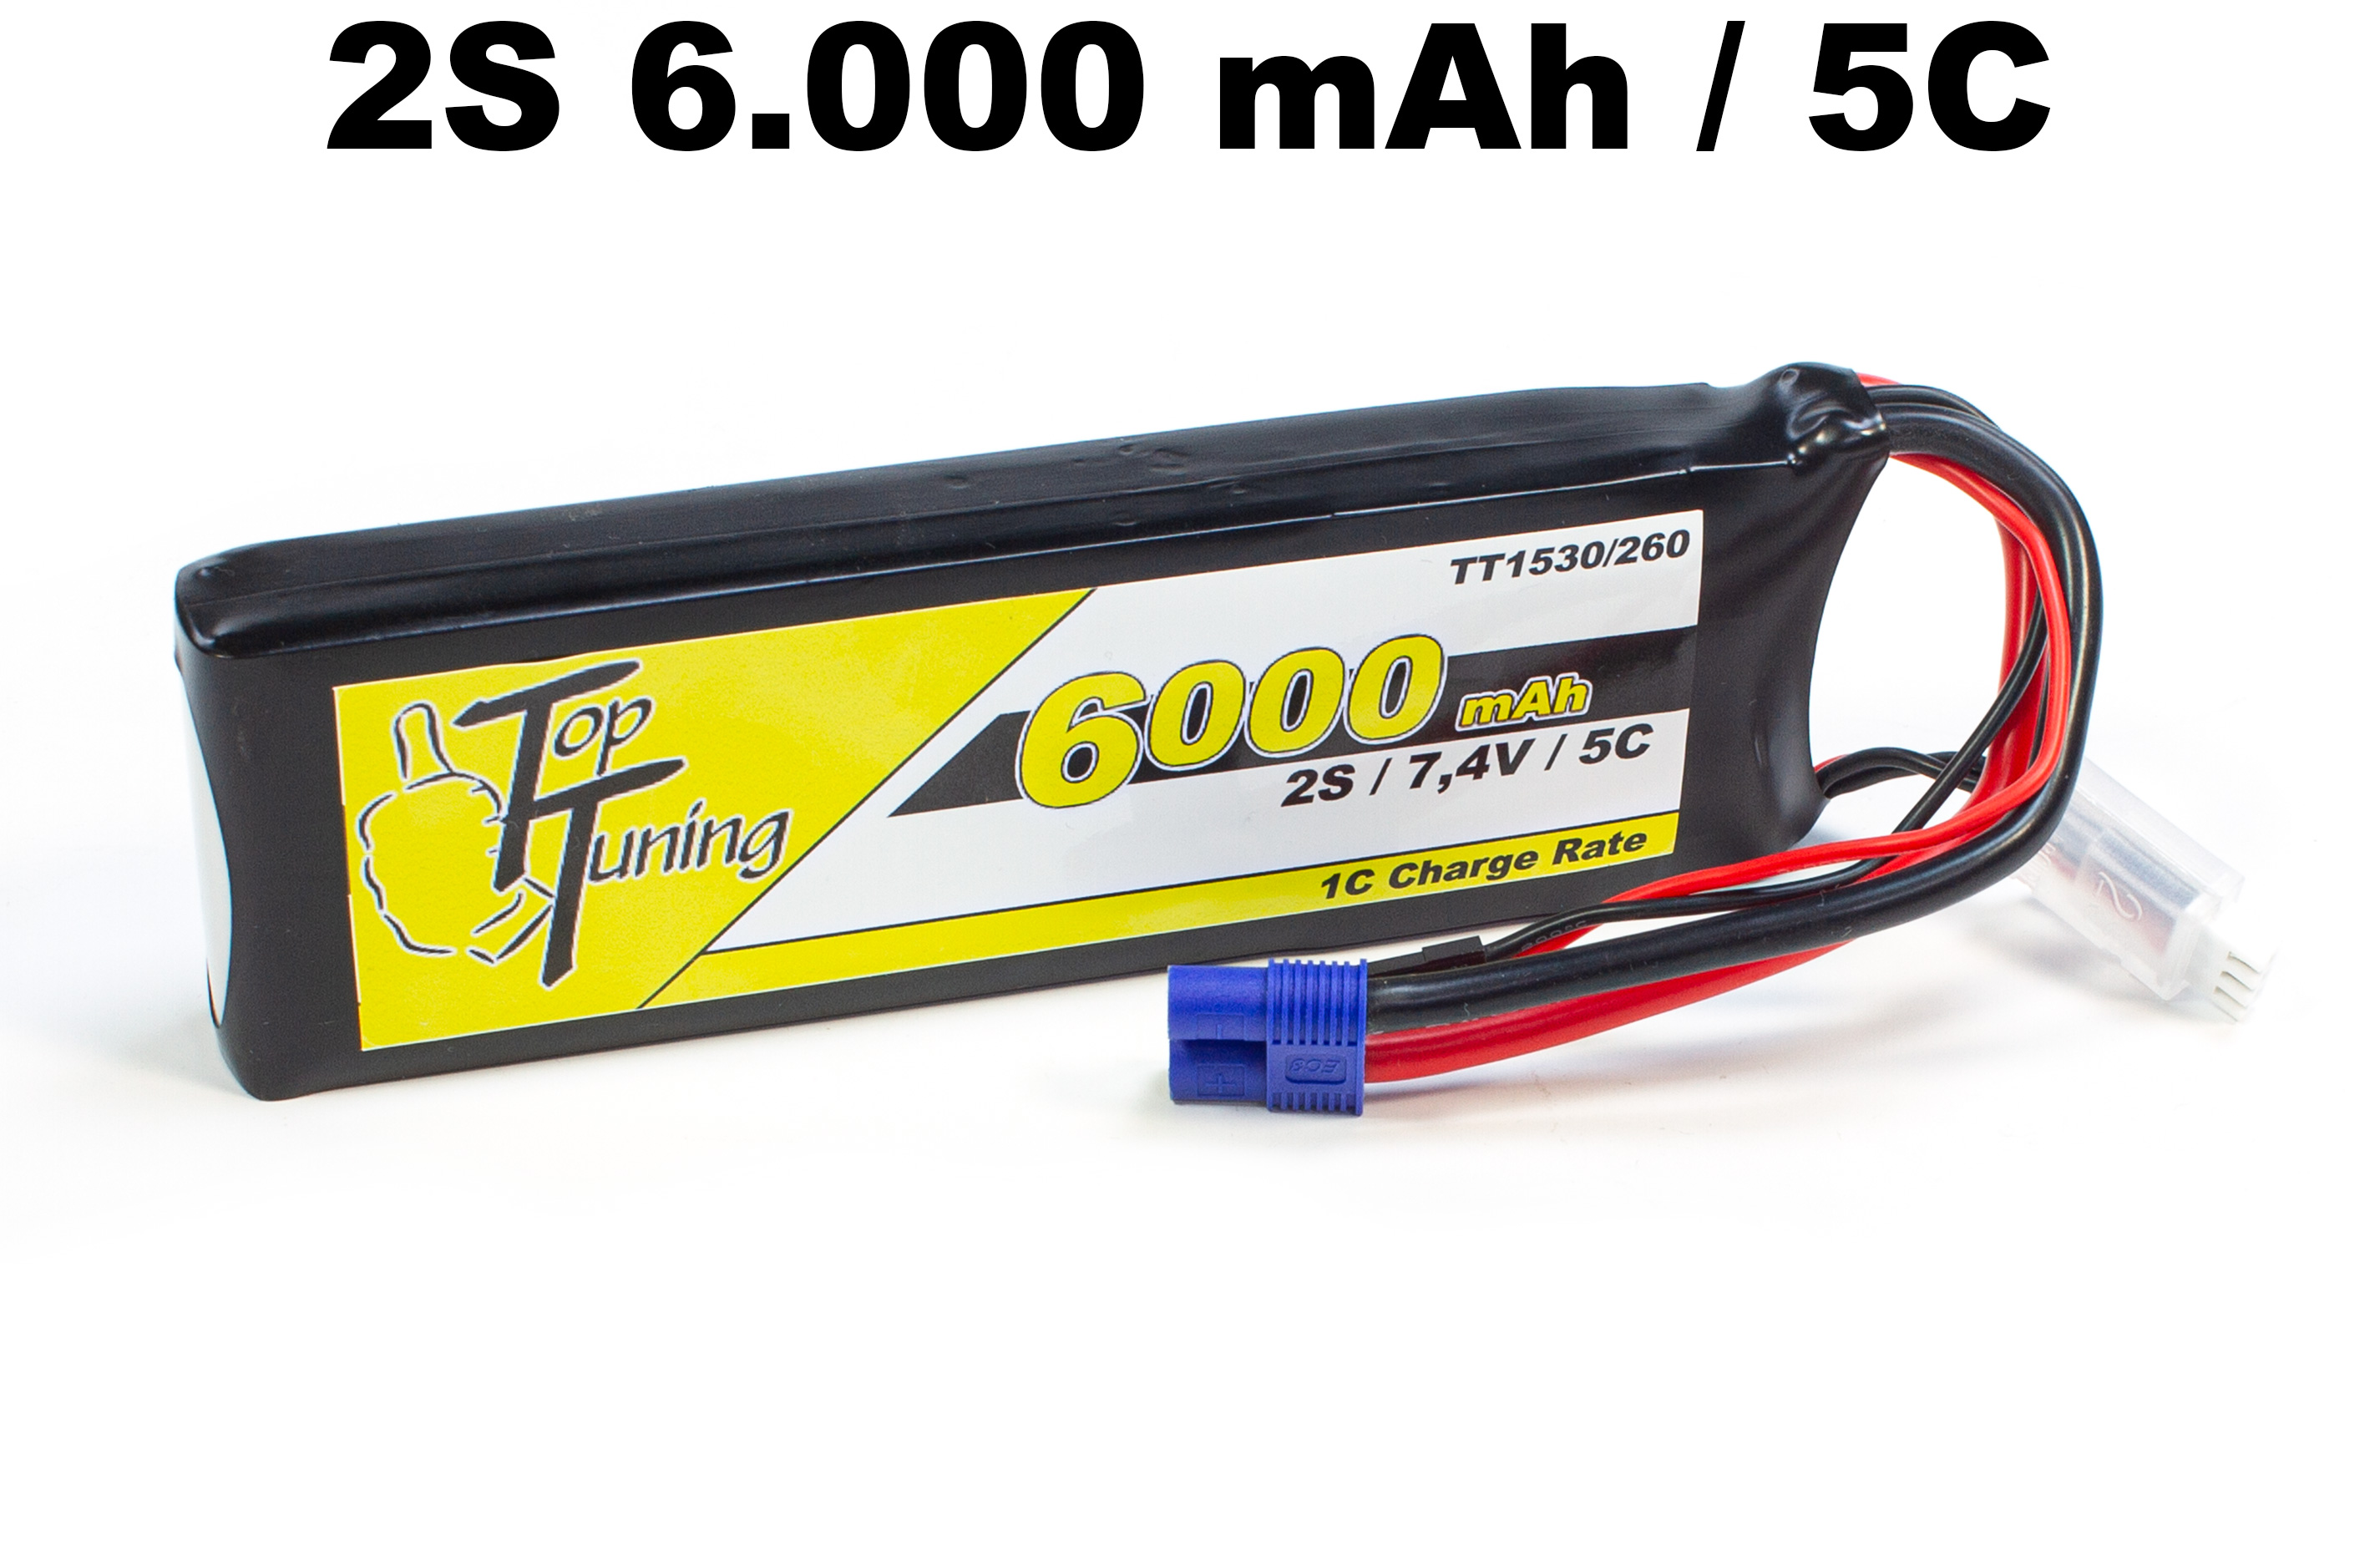 TT1530/260 Top Tuning 6000 mAh LiPo receiver battery 2S, 7,4V 5C Angebot